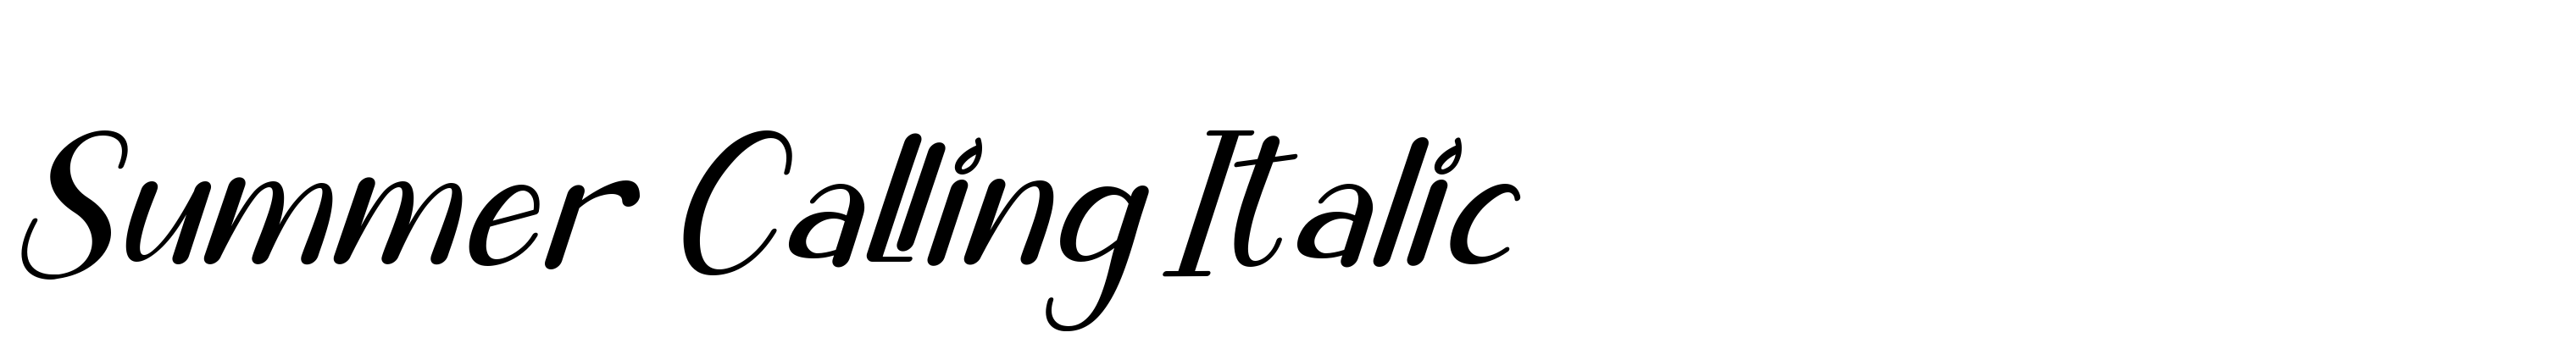 Summer Calling Italic